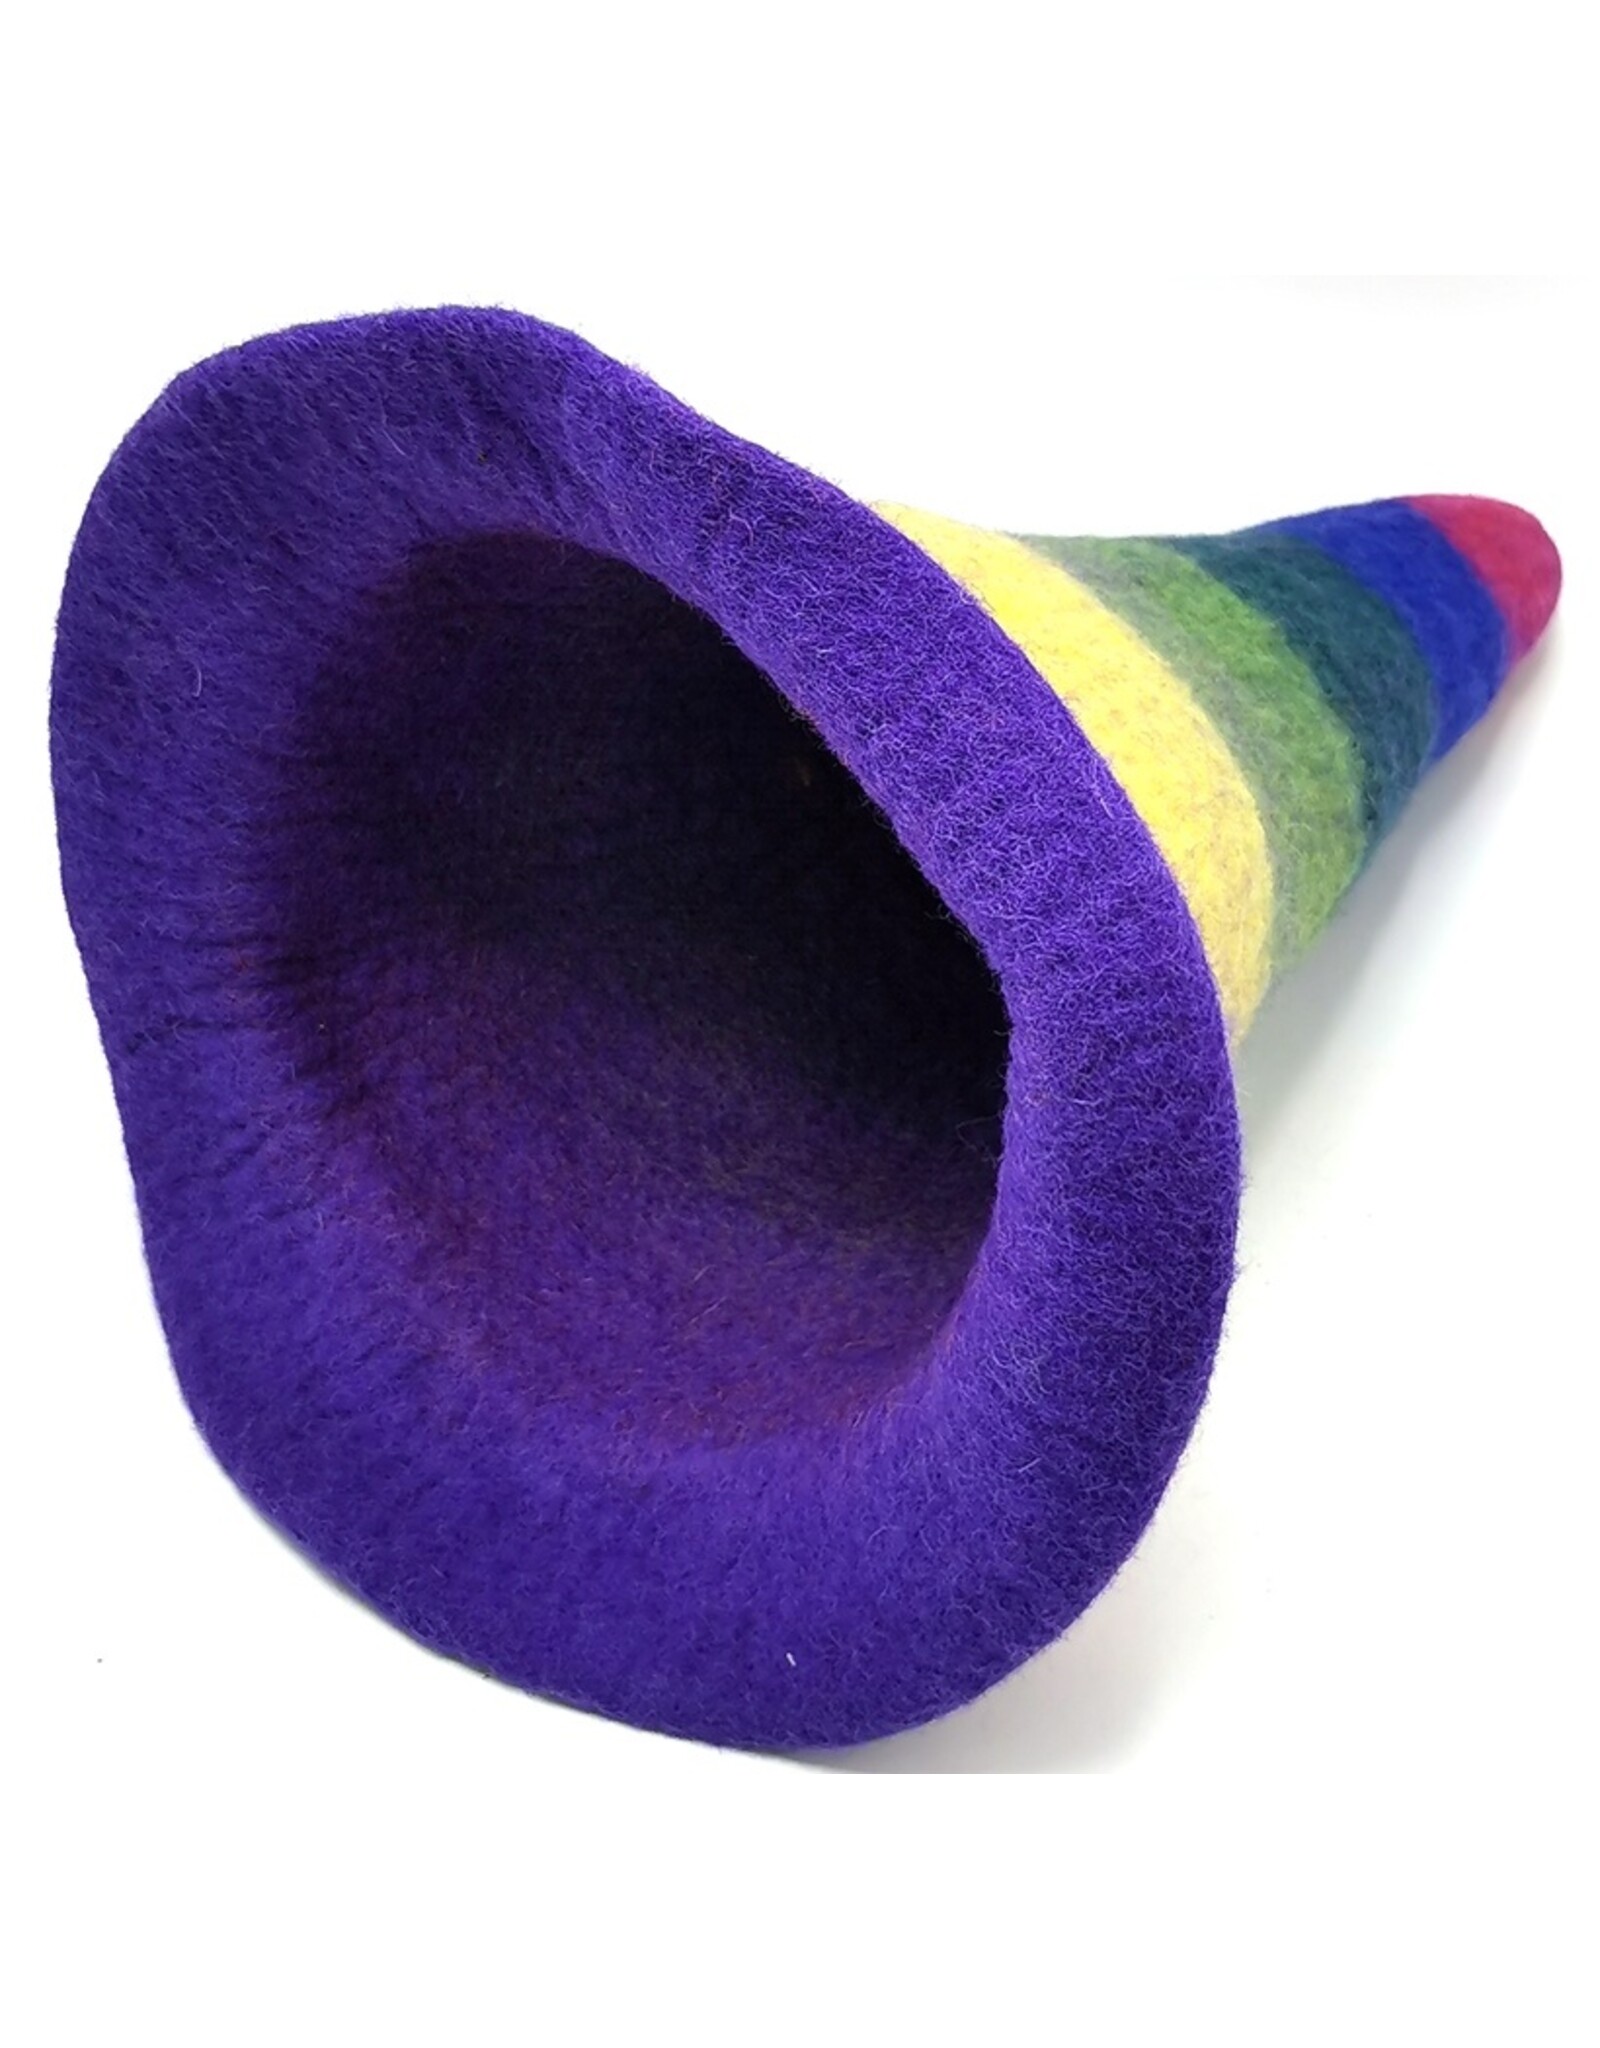 Trukado Miscellaneous - Felt pointed hat "Rainbow"- hand felted, 100% wool